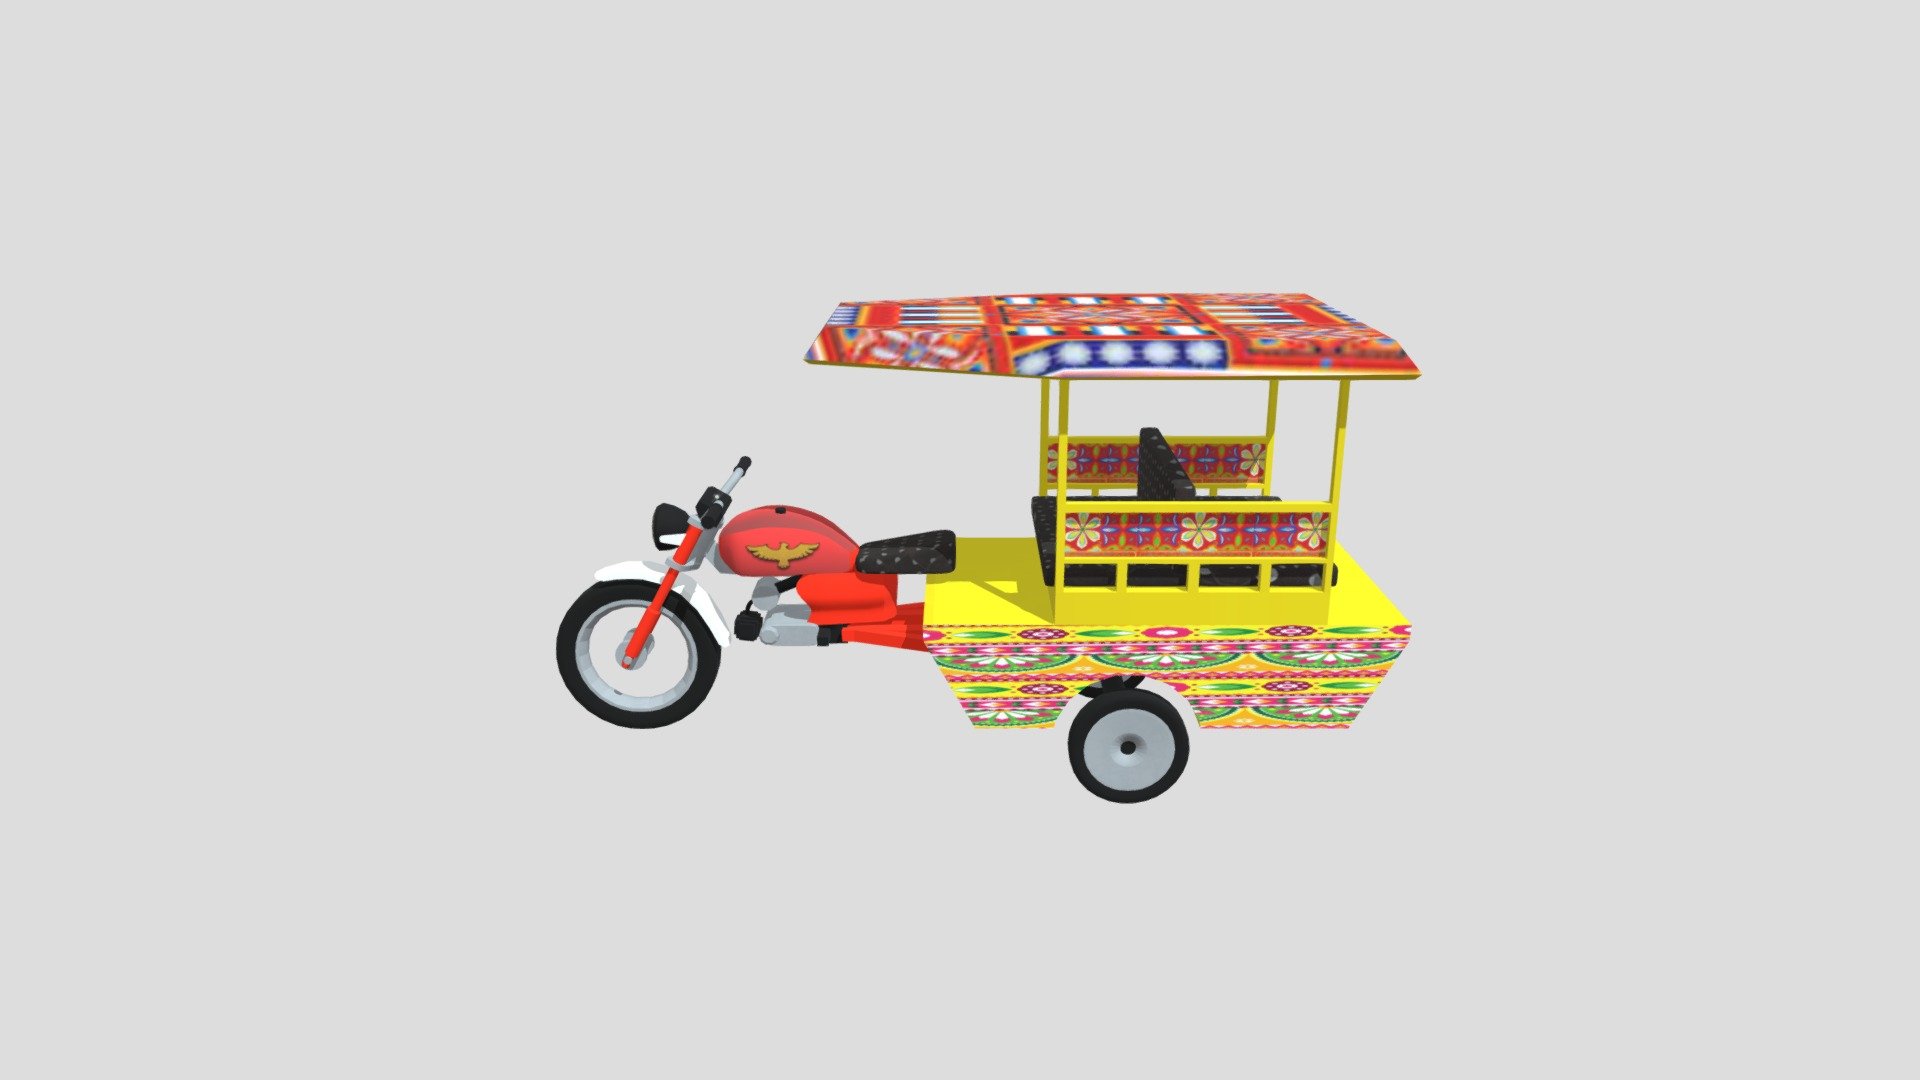 Chigchi auto rickshaw 3d model. tuk tuk auto rickshaw  is a 3 wheeler car used as asia taxi car.  tuk tuk 3d model with texture 3d model